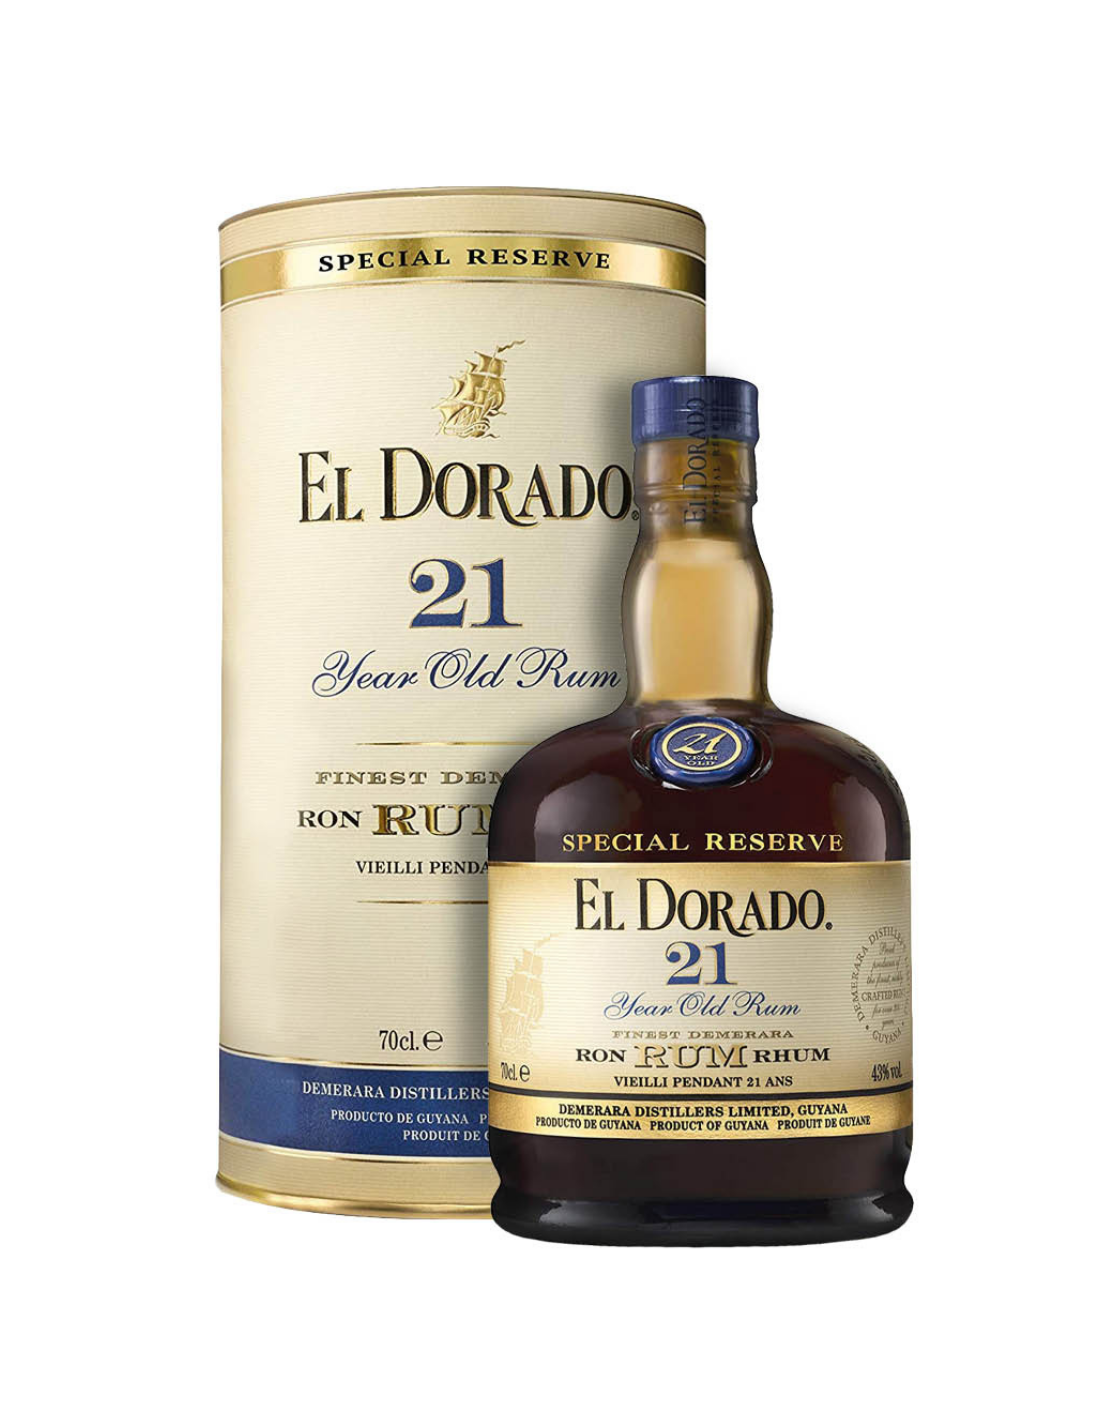 Rom negru El Dorado Special Reserve 21 Years Old Cask Aged Demerara, 43% alc., 0.7L, Guyana alcooldiscount.ro